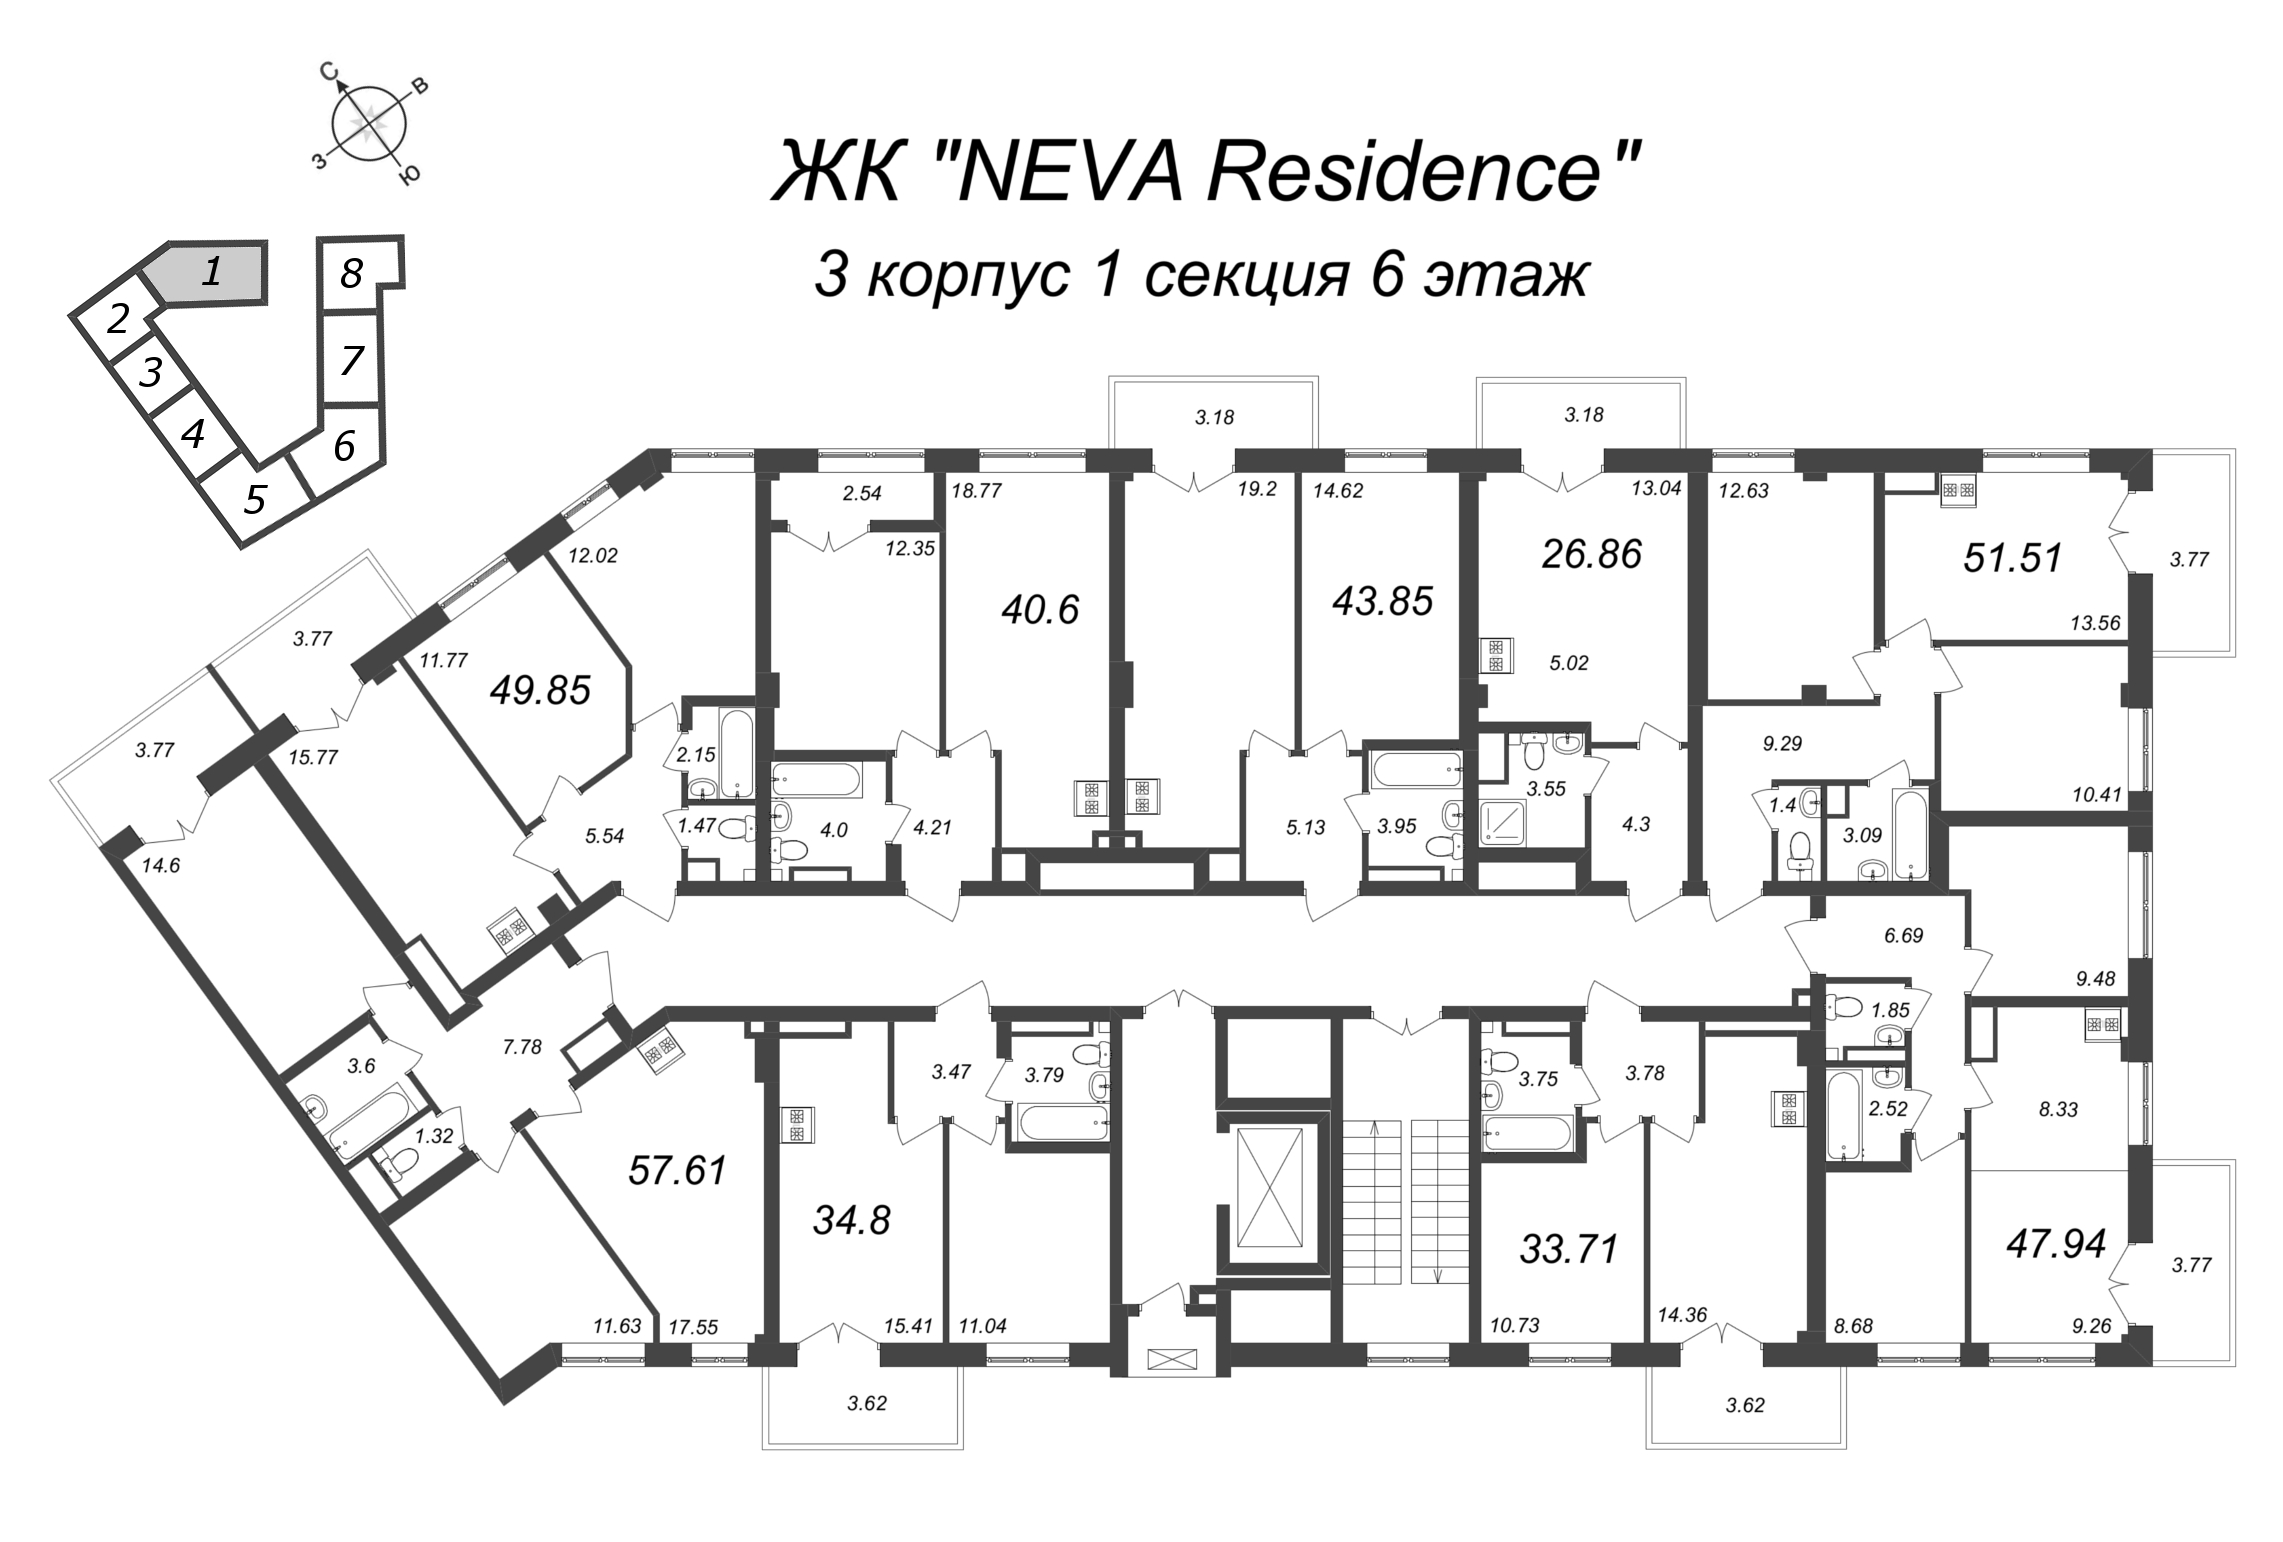 2-комнатная (Евро) квартира, 34.8 м² - планировка этажа